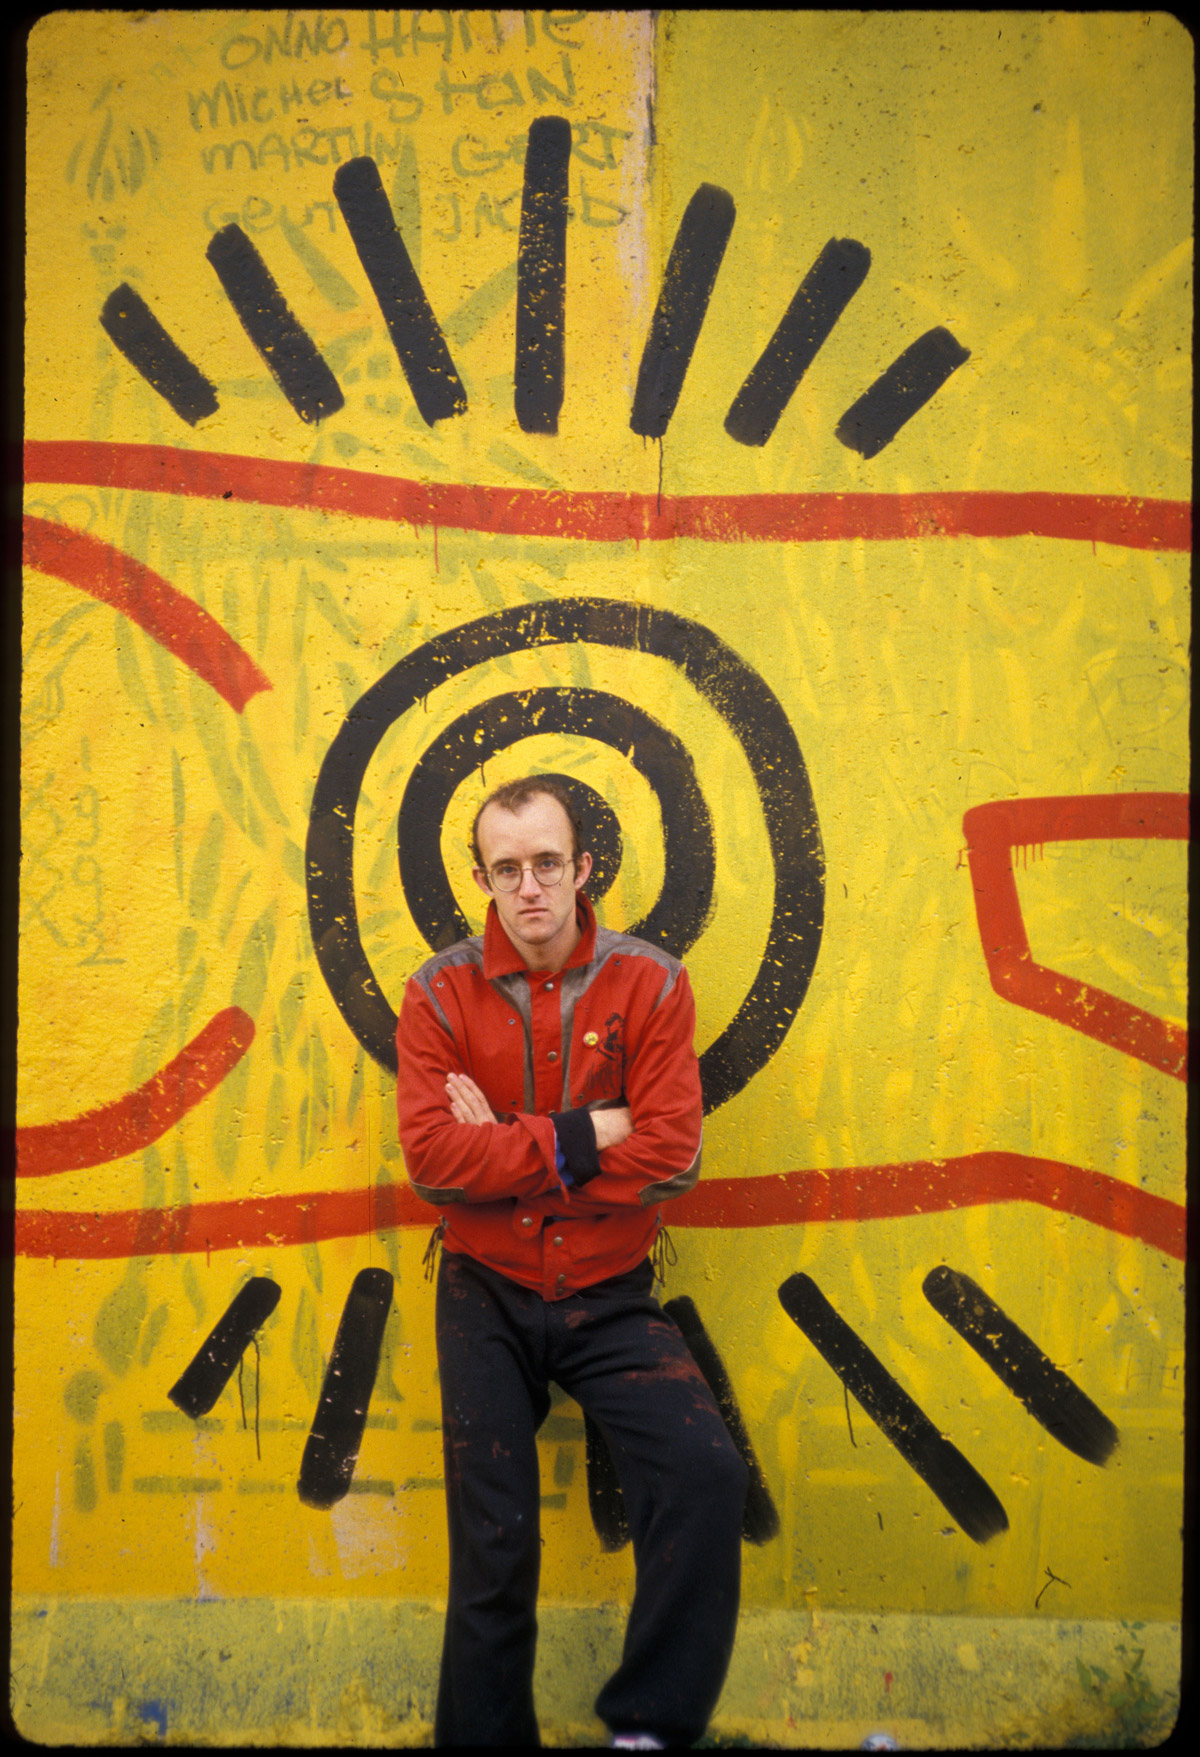 Keith Haring mural at Berlin Wall, Berlin, 1986